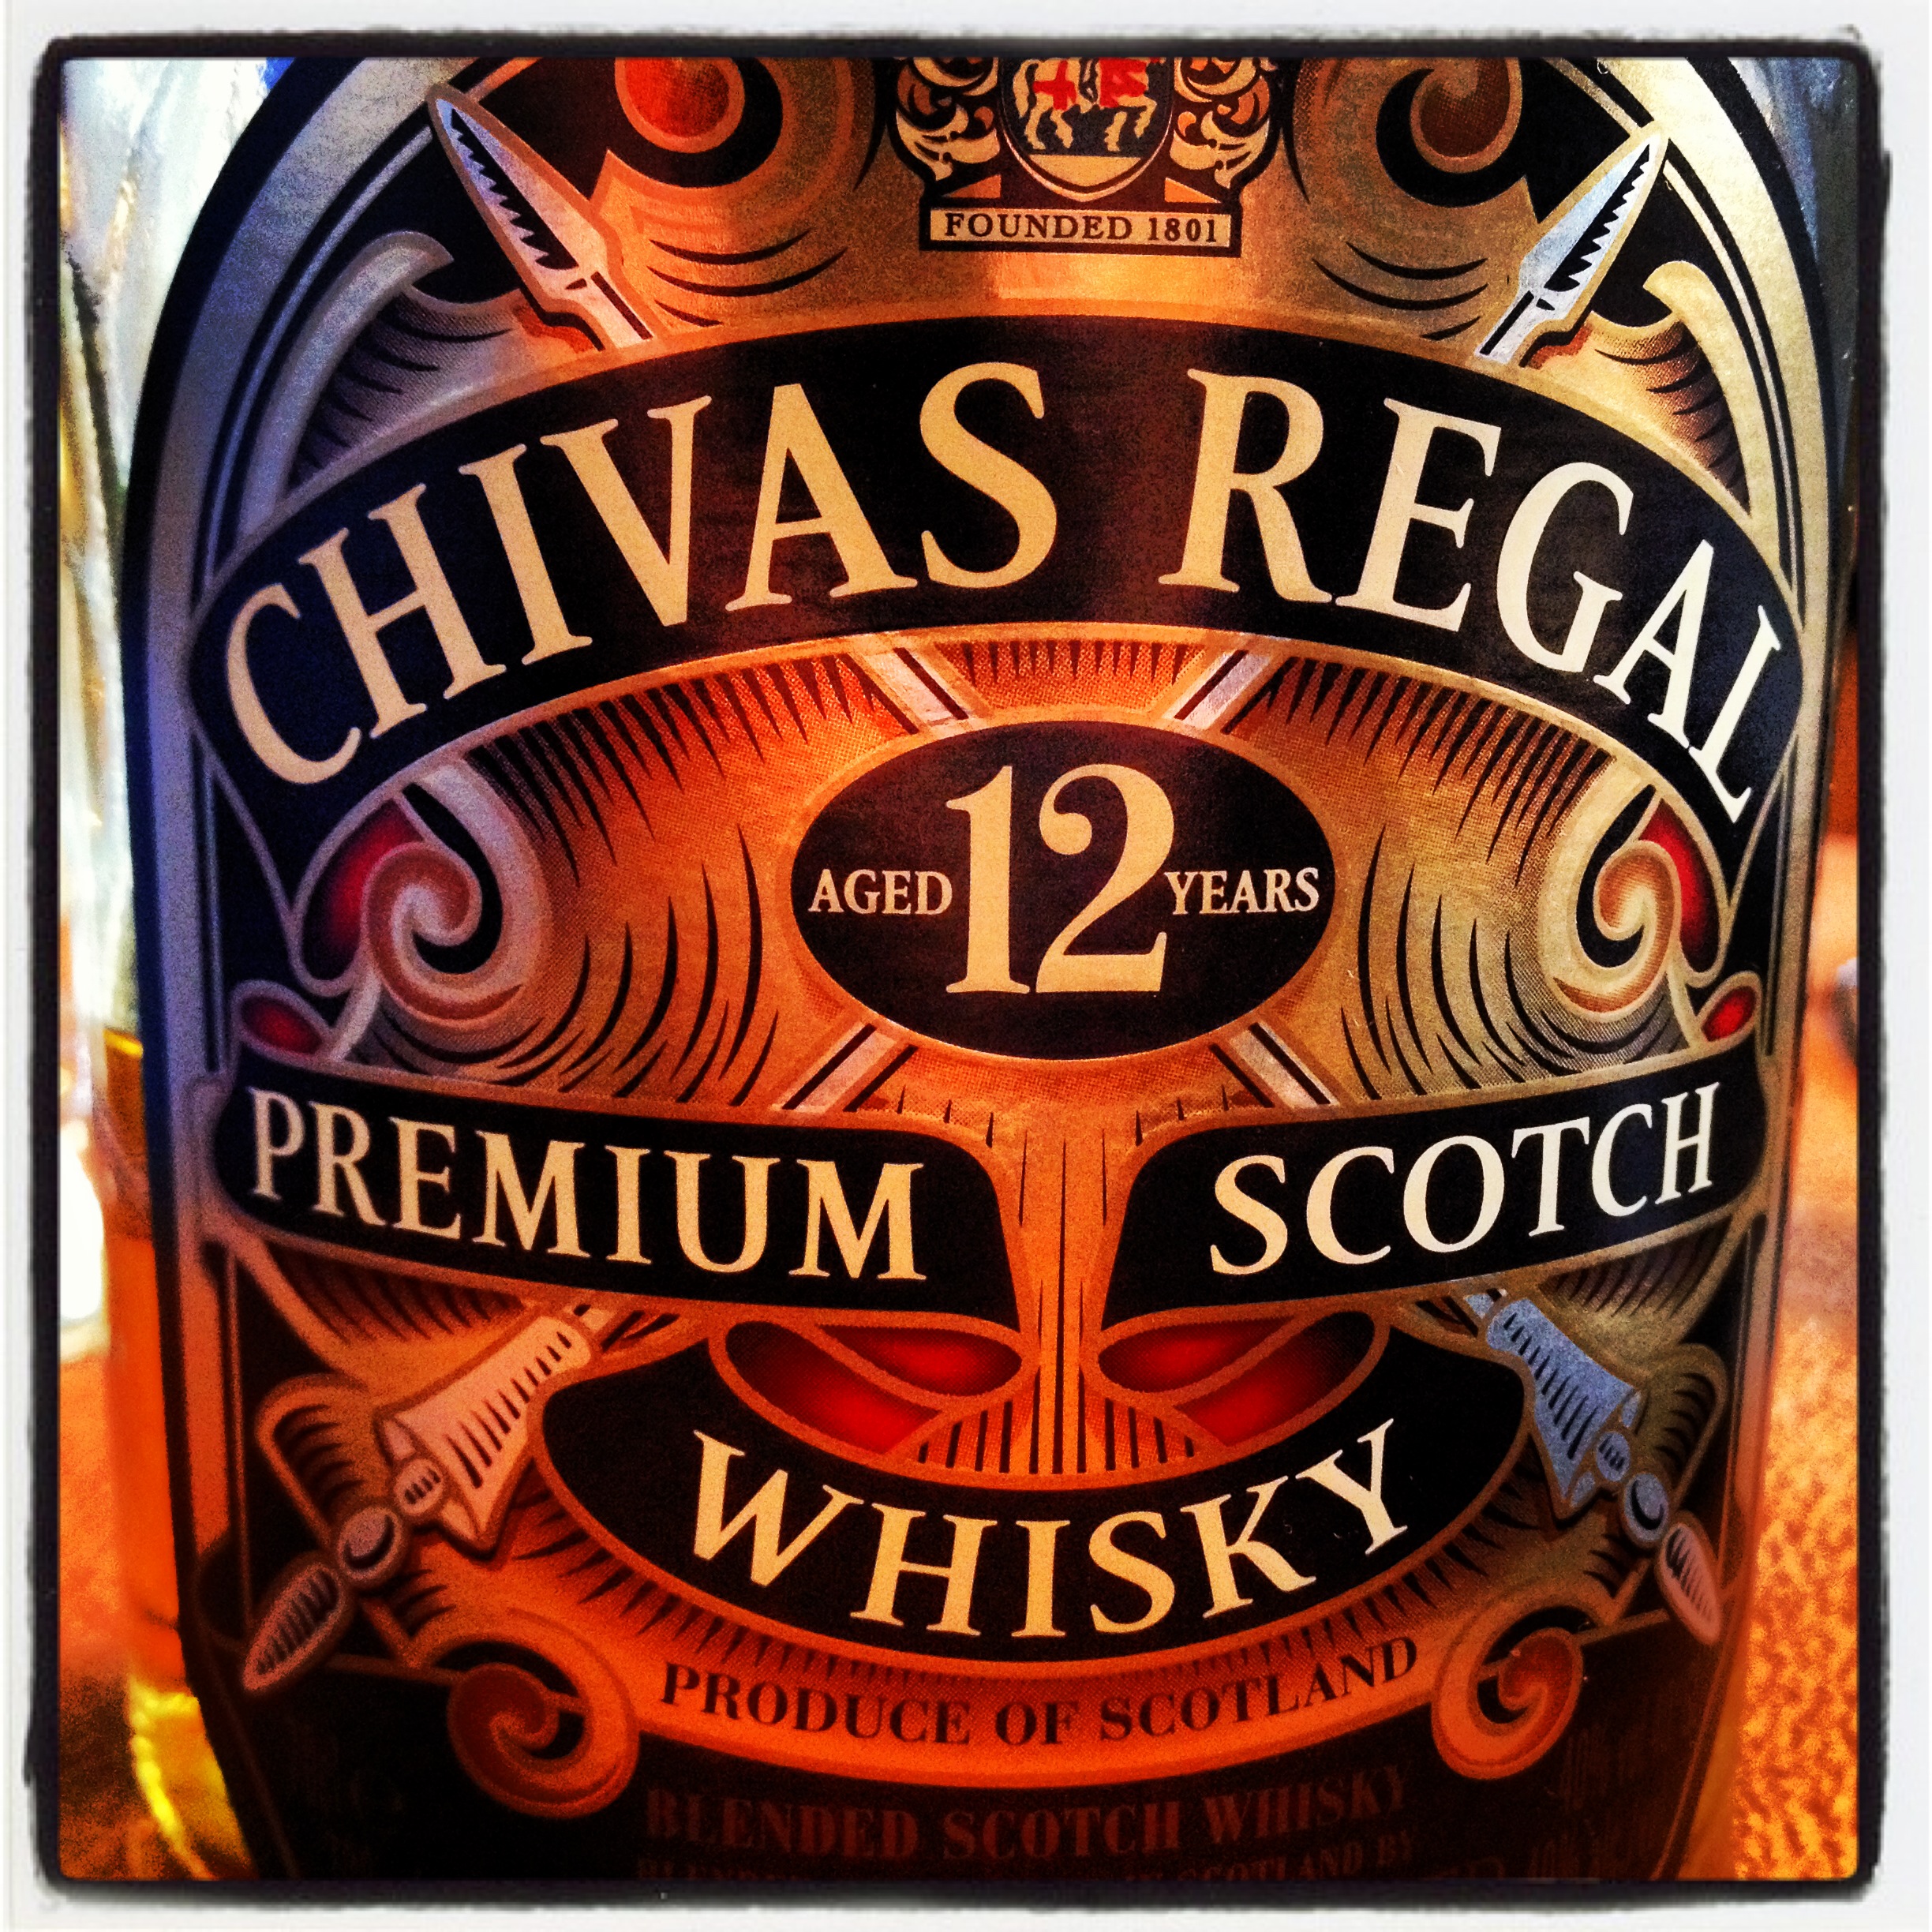 Chivas Regal – DRINKS ENTHUSIAST